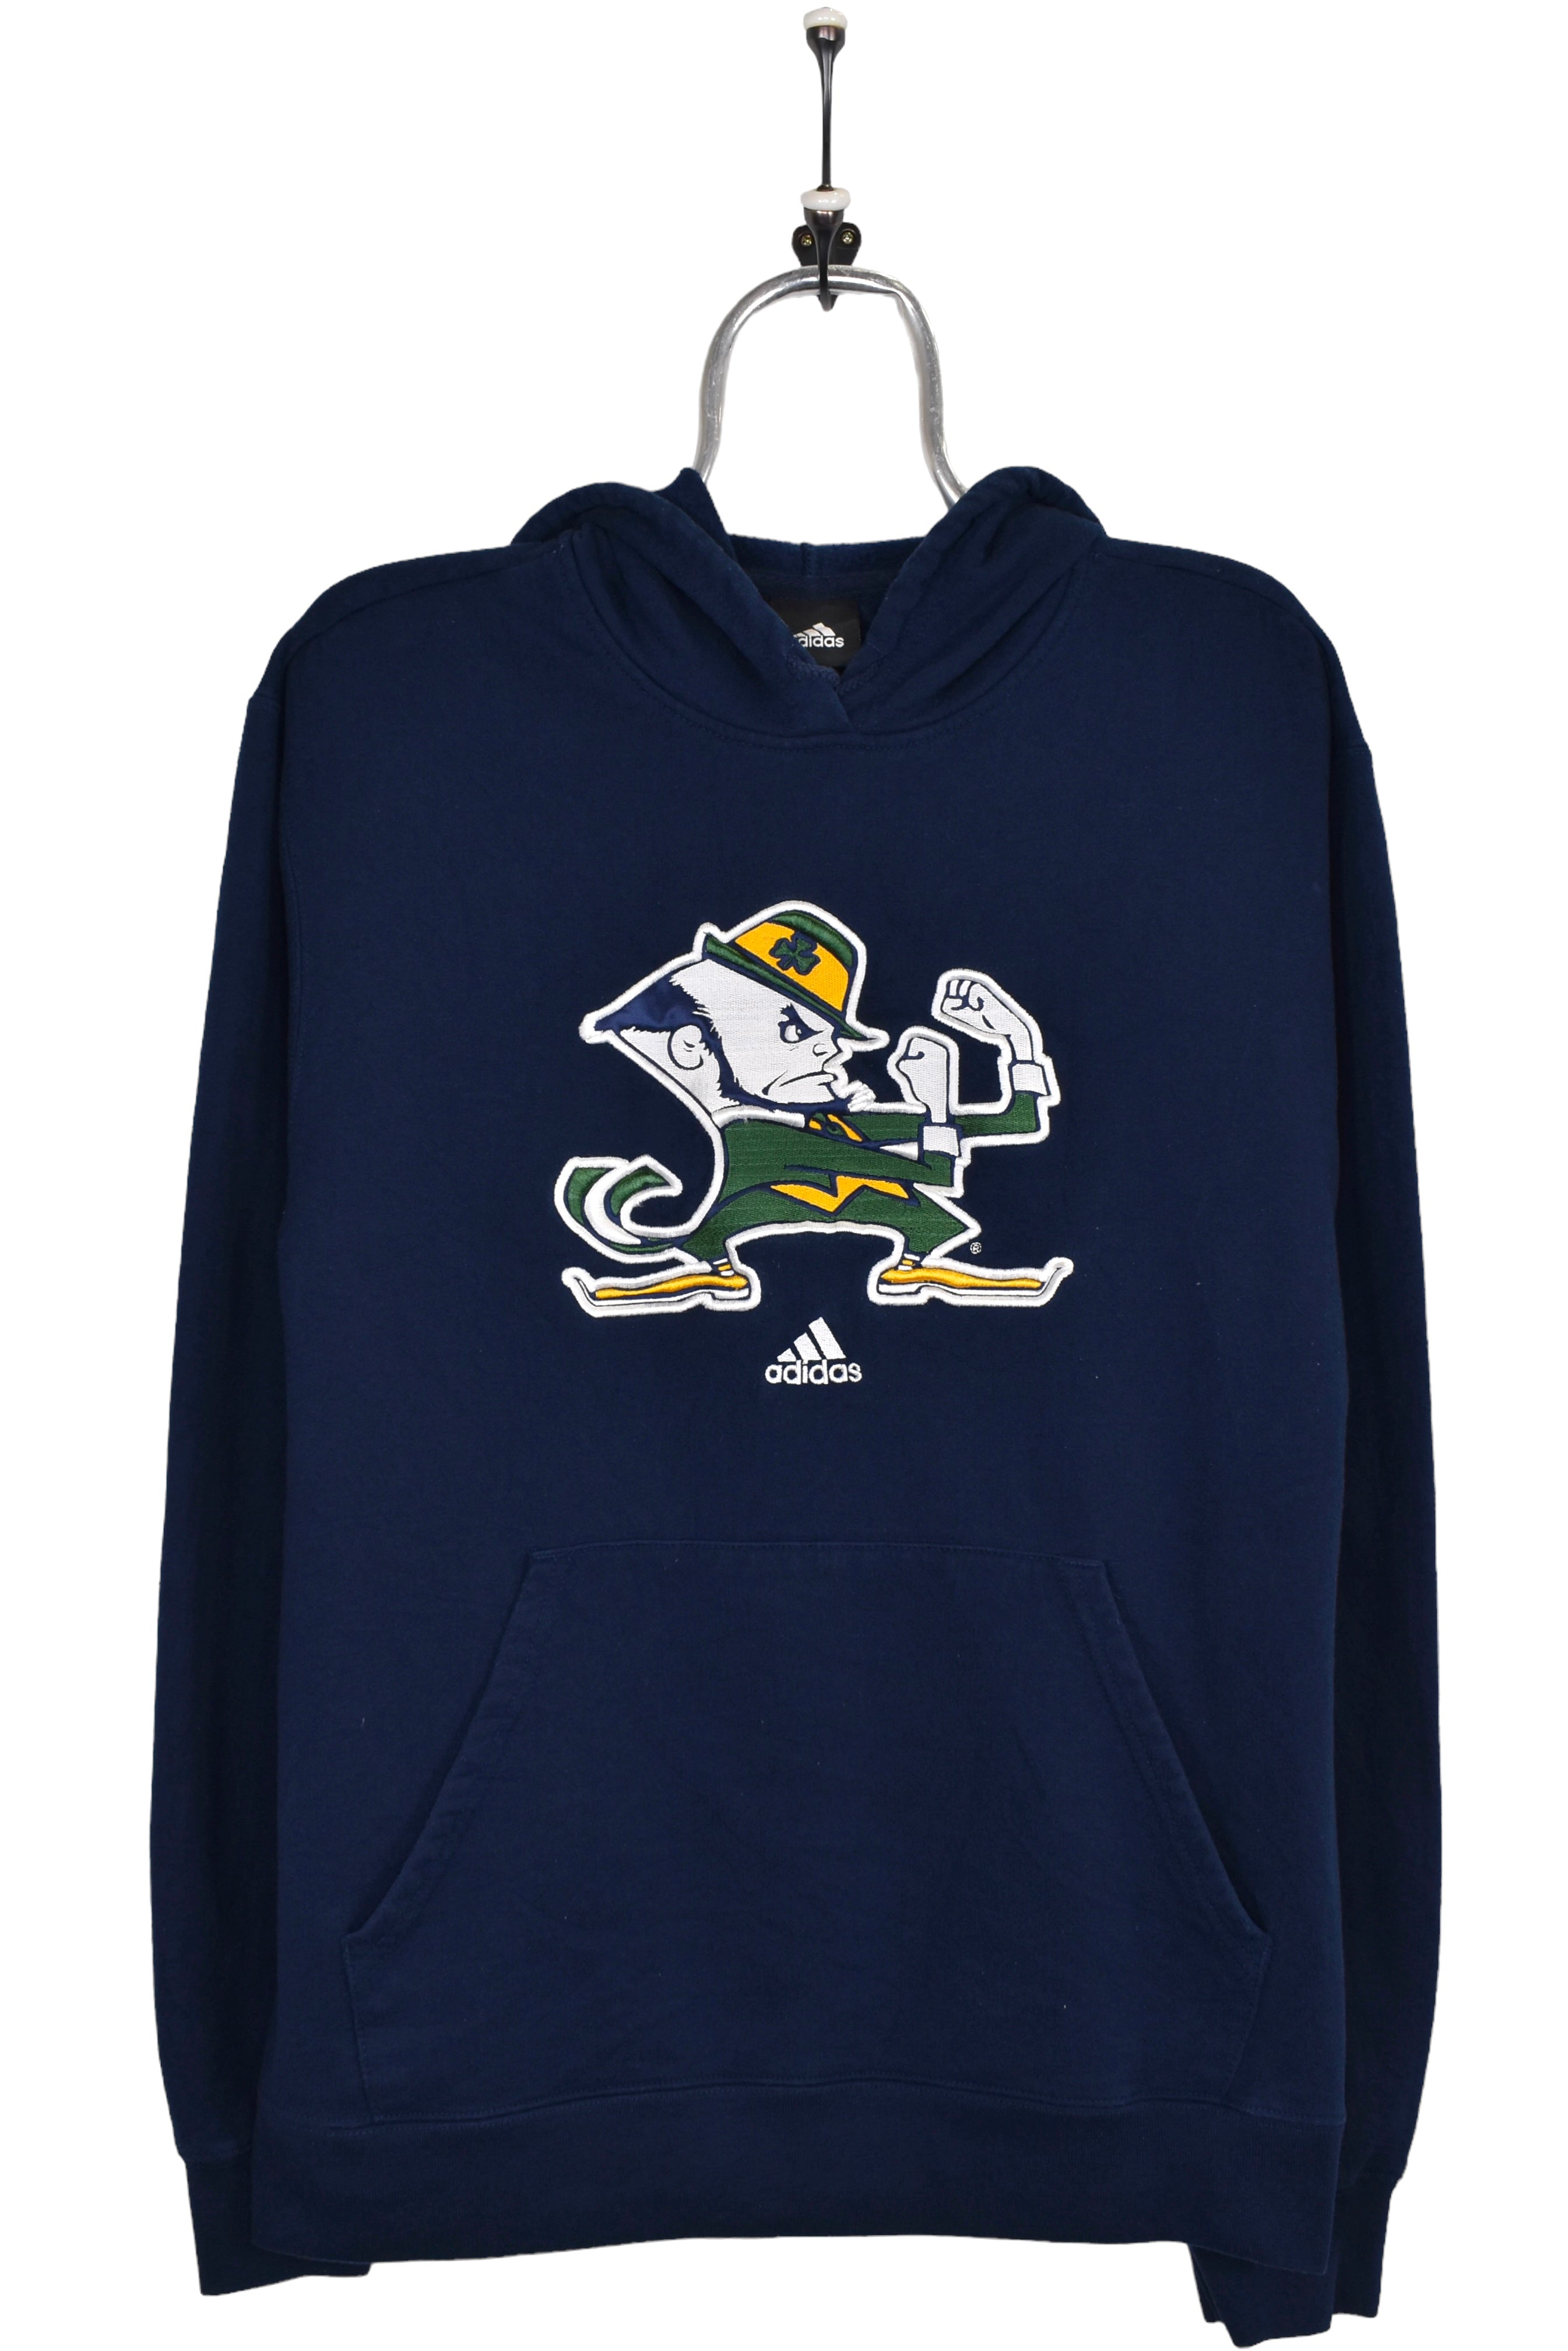 Vintage University of Notre Dame hoodie, navy embroidered sweatshirt - Medium